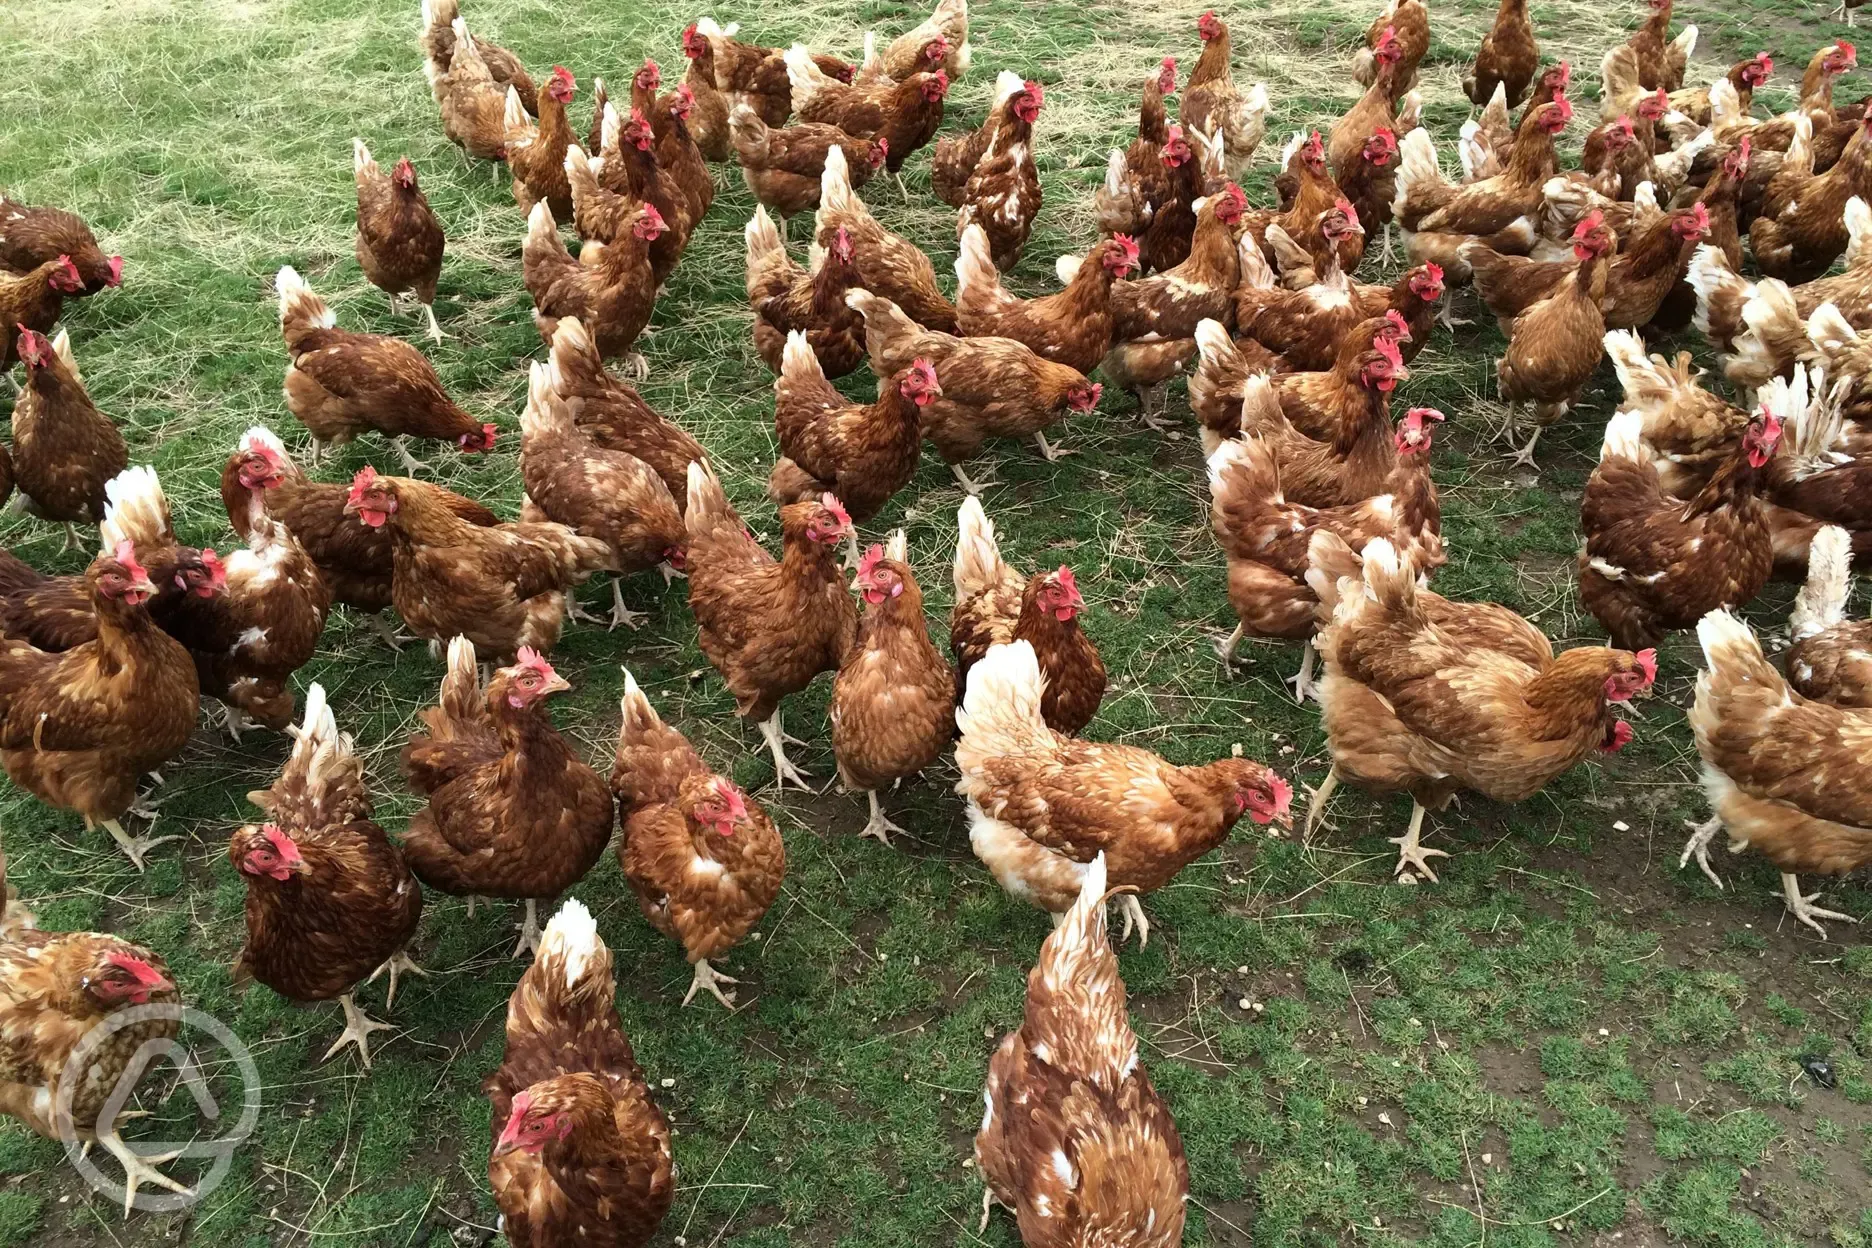 Free range chickens on the farm. 